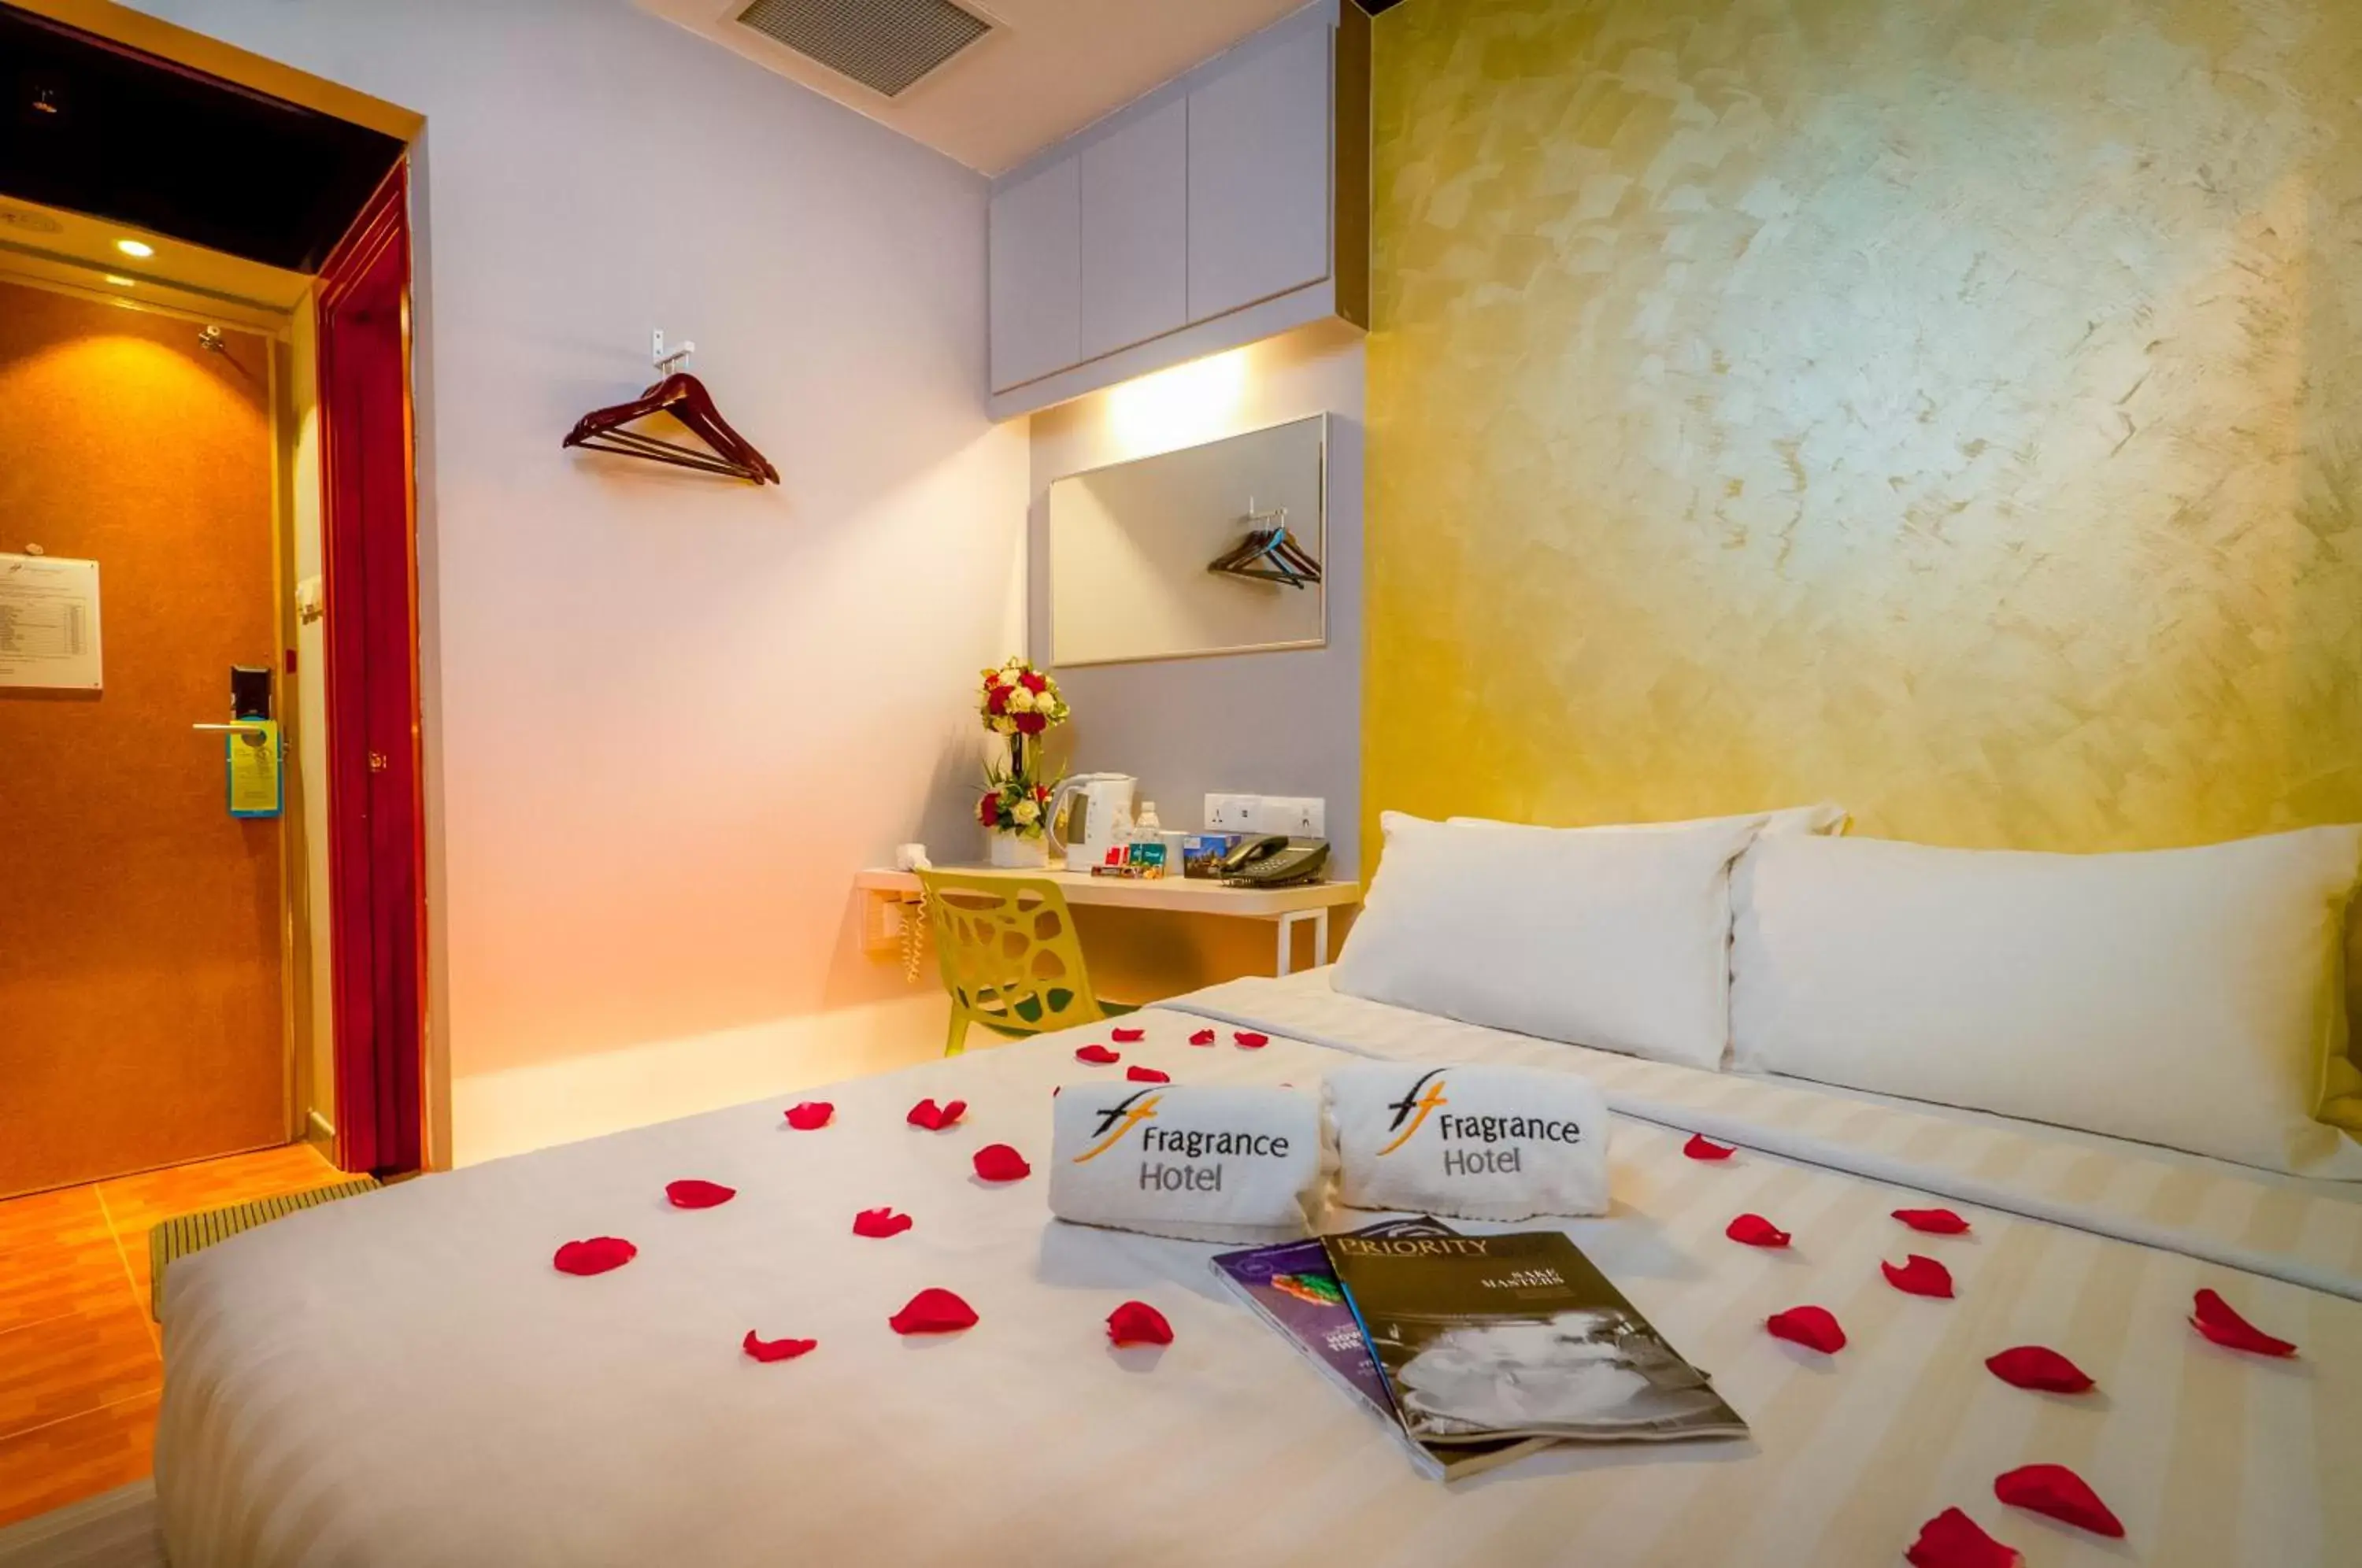 Decorative detail, Bed in Fragrance Hotel - Rose